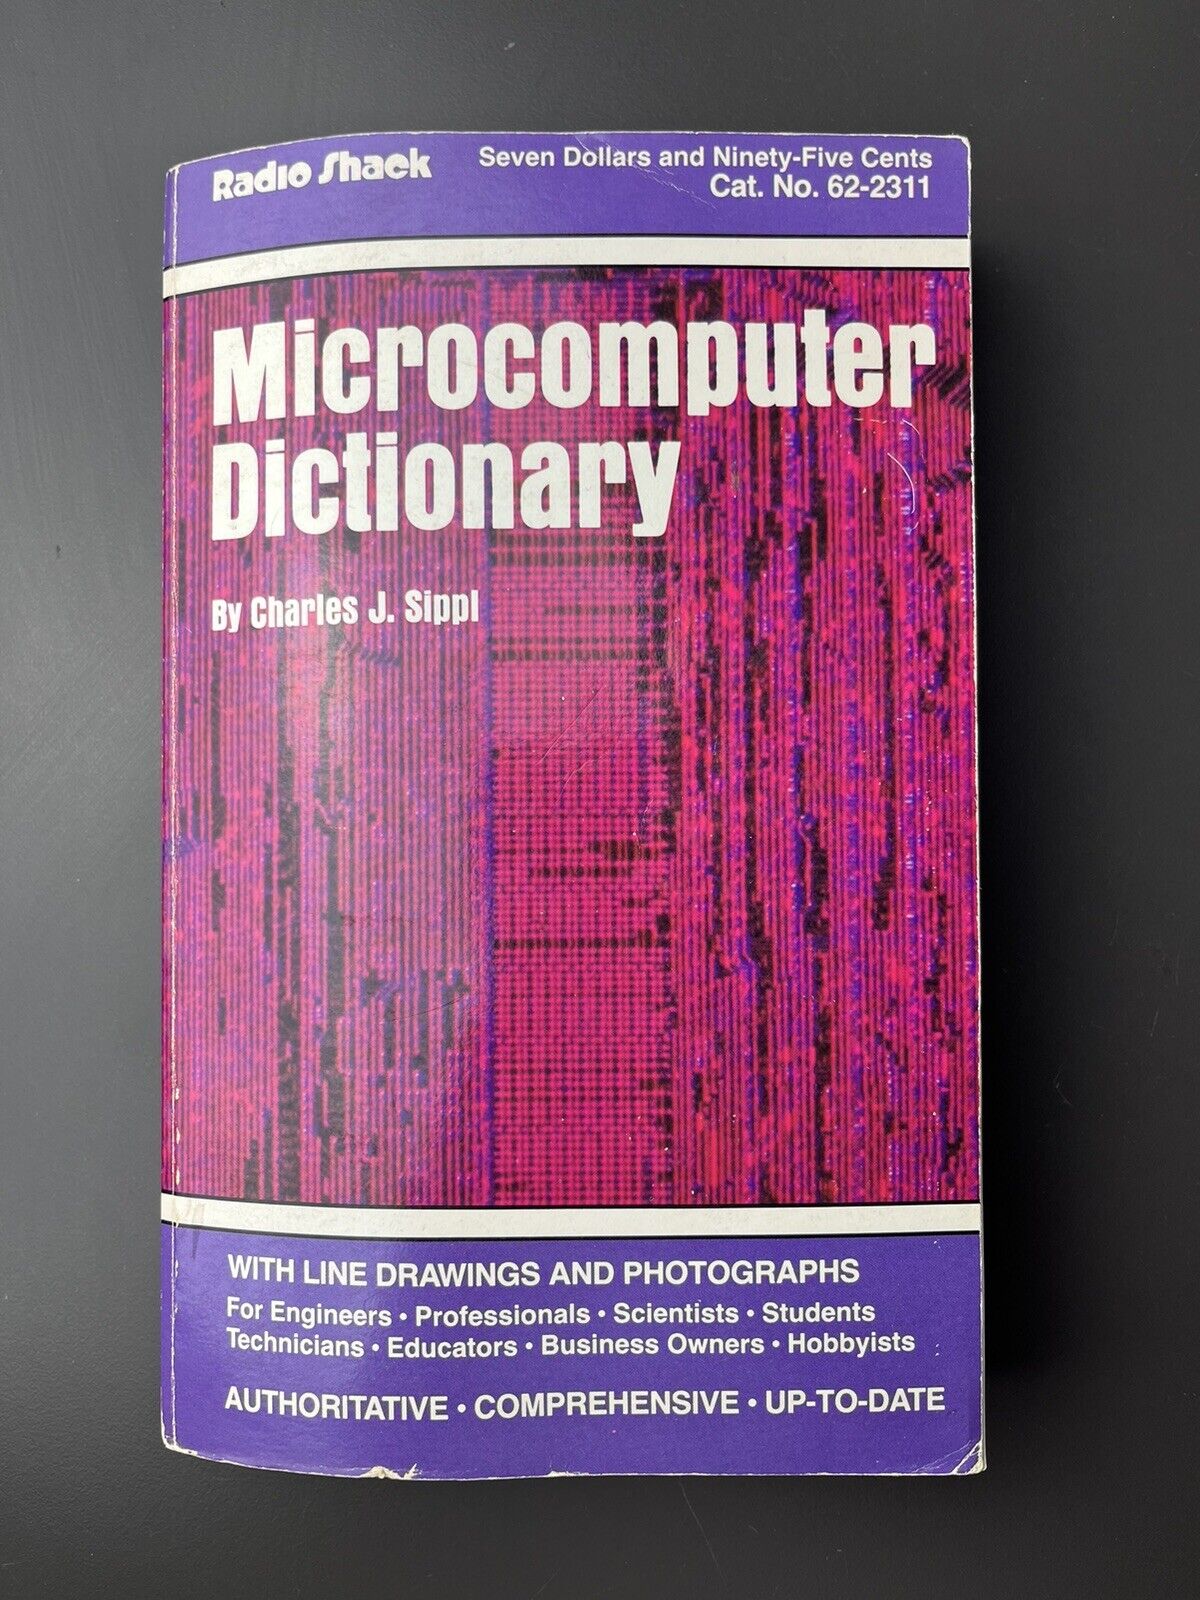 Radio Shack\'s Microcomputer Dictionary CAT 62-2311